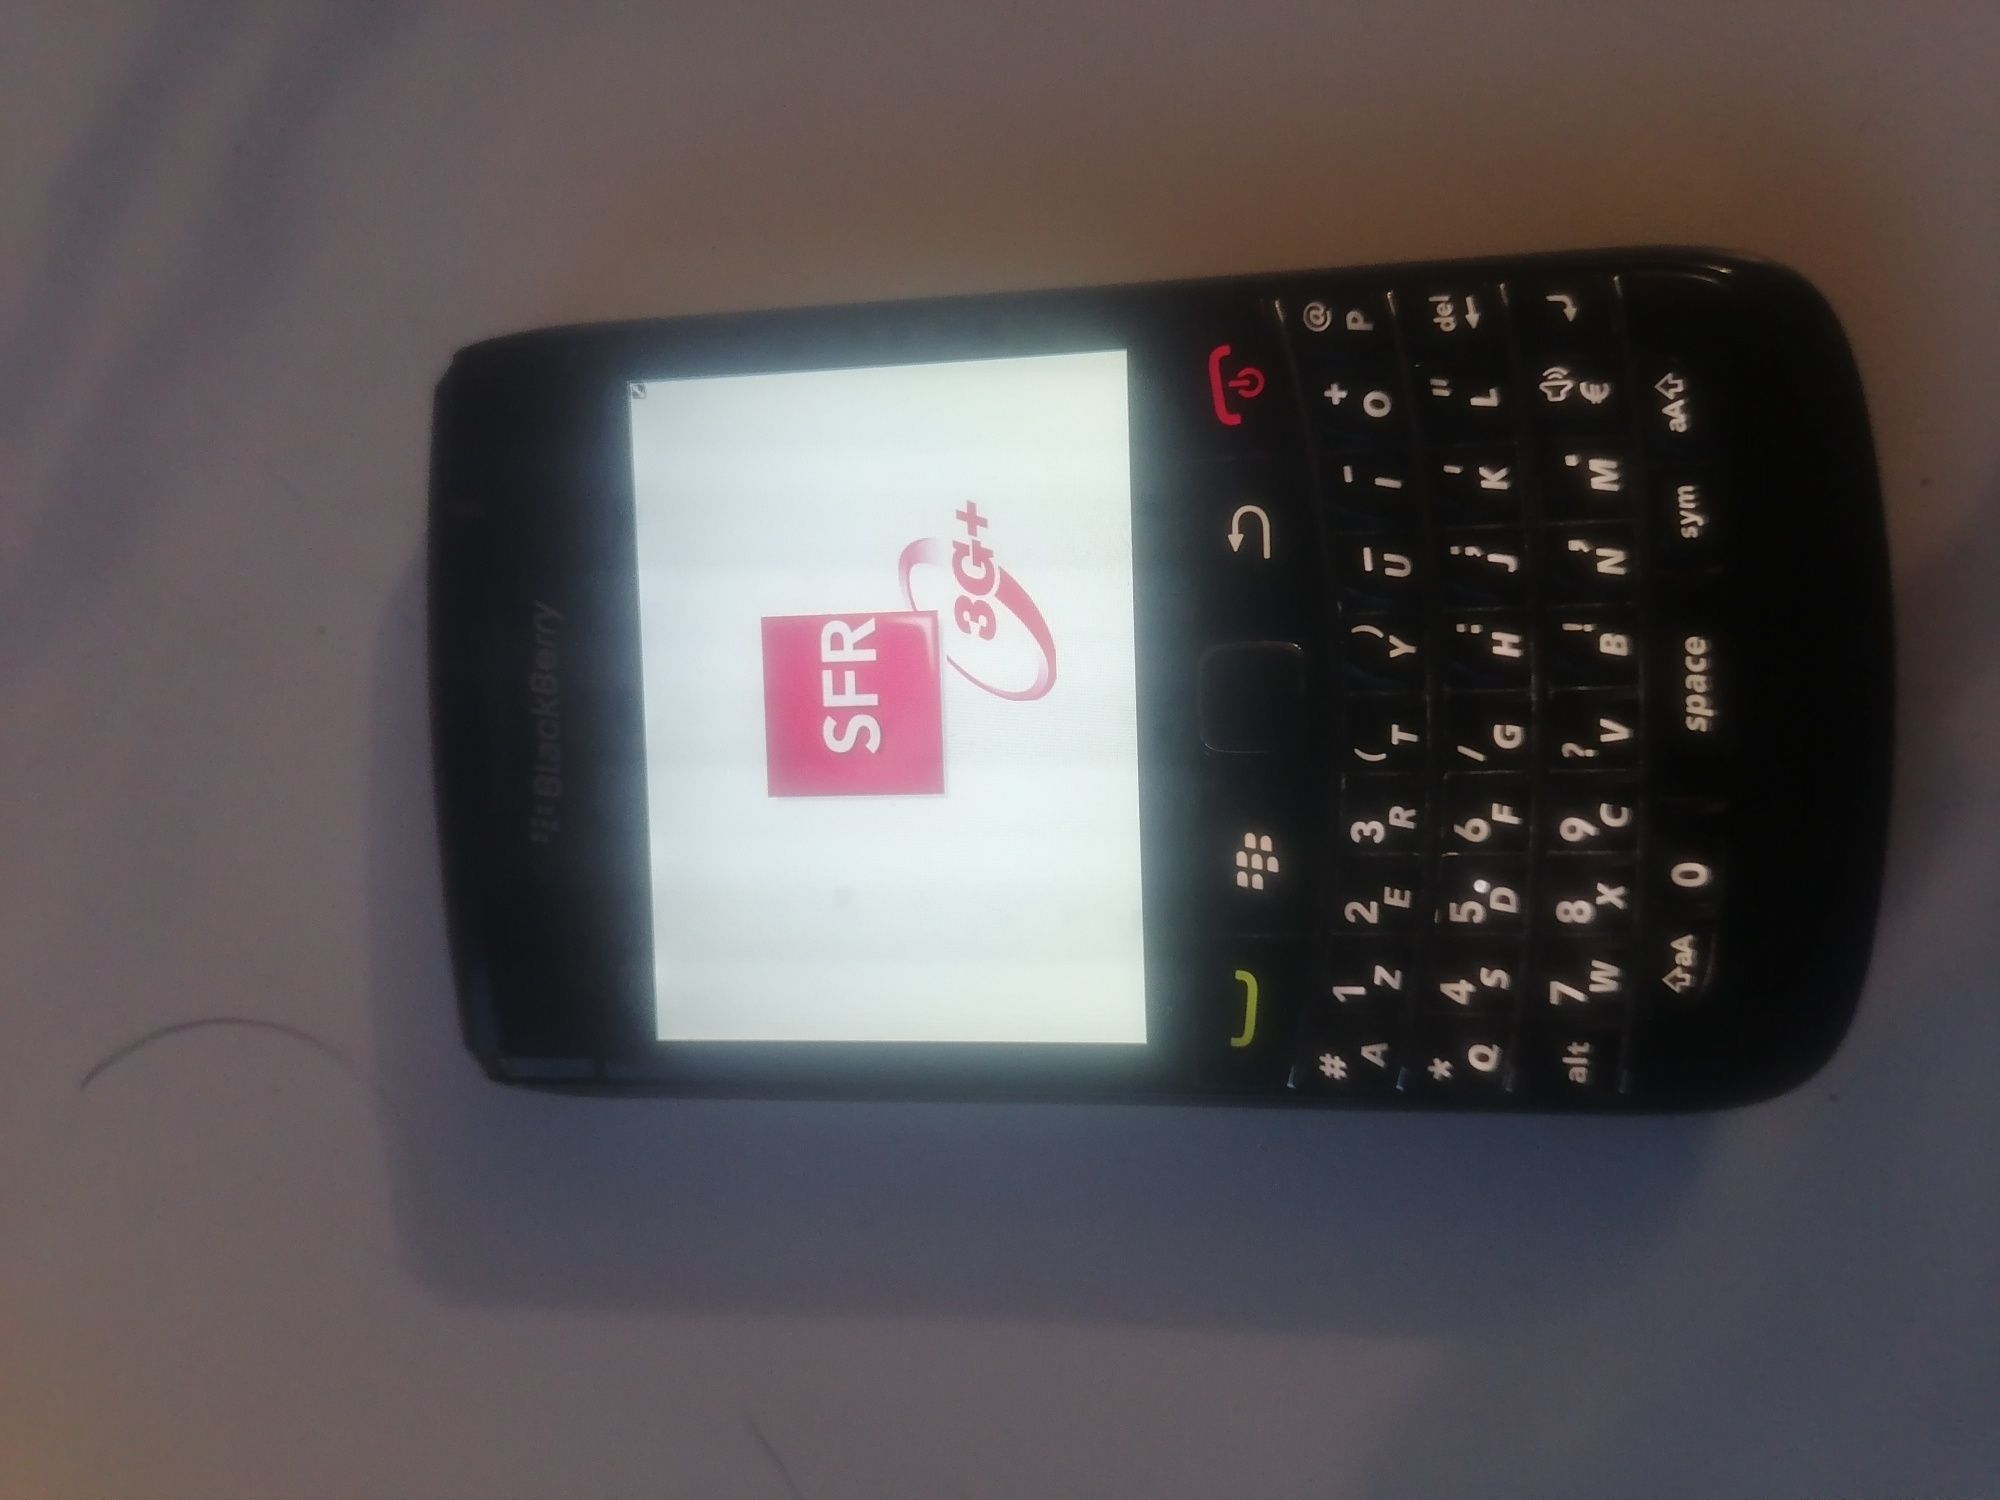 Blackberry 9700.